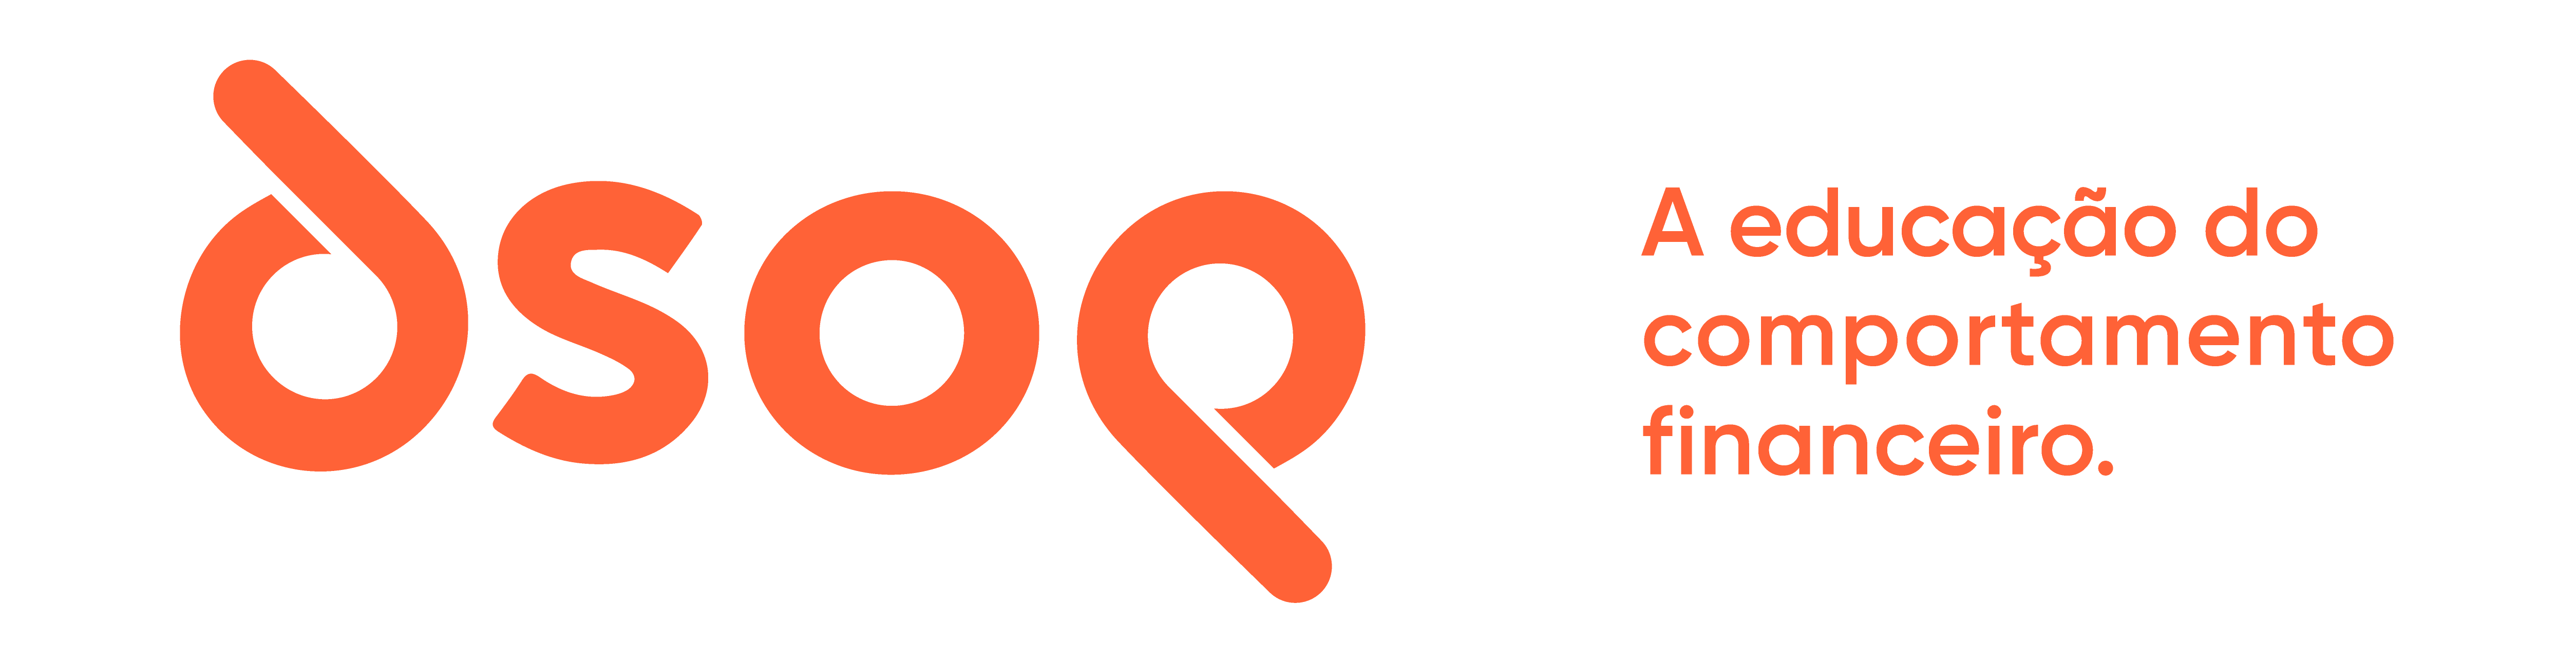 Dsop slogan orange